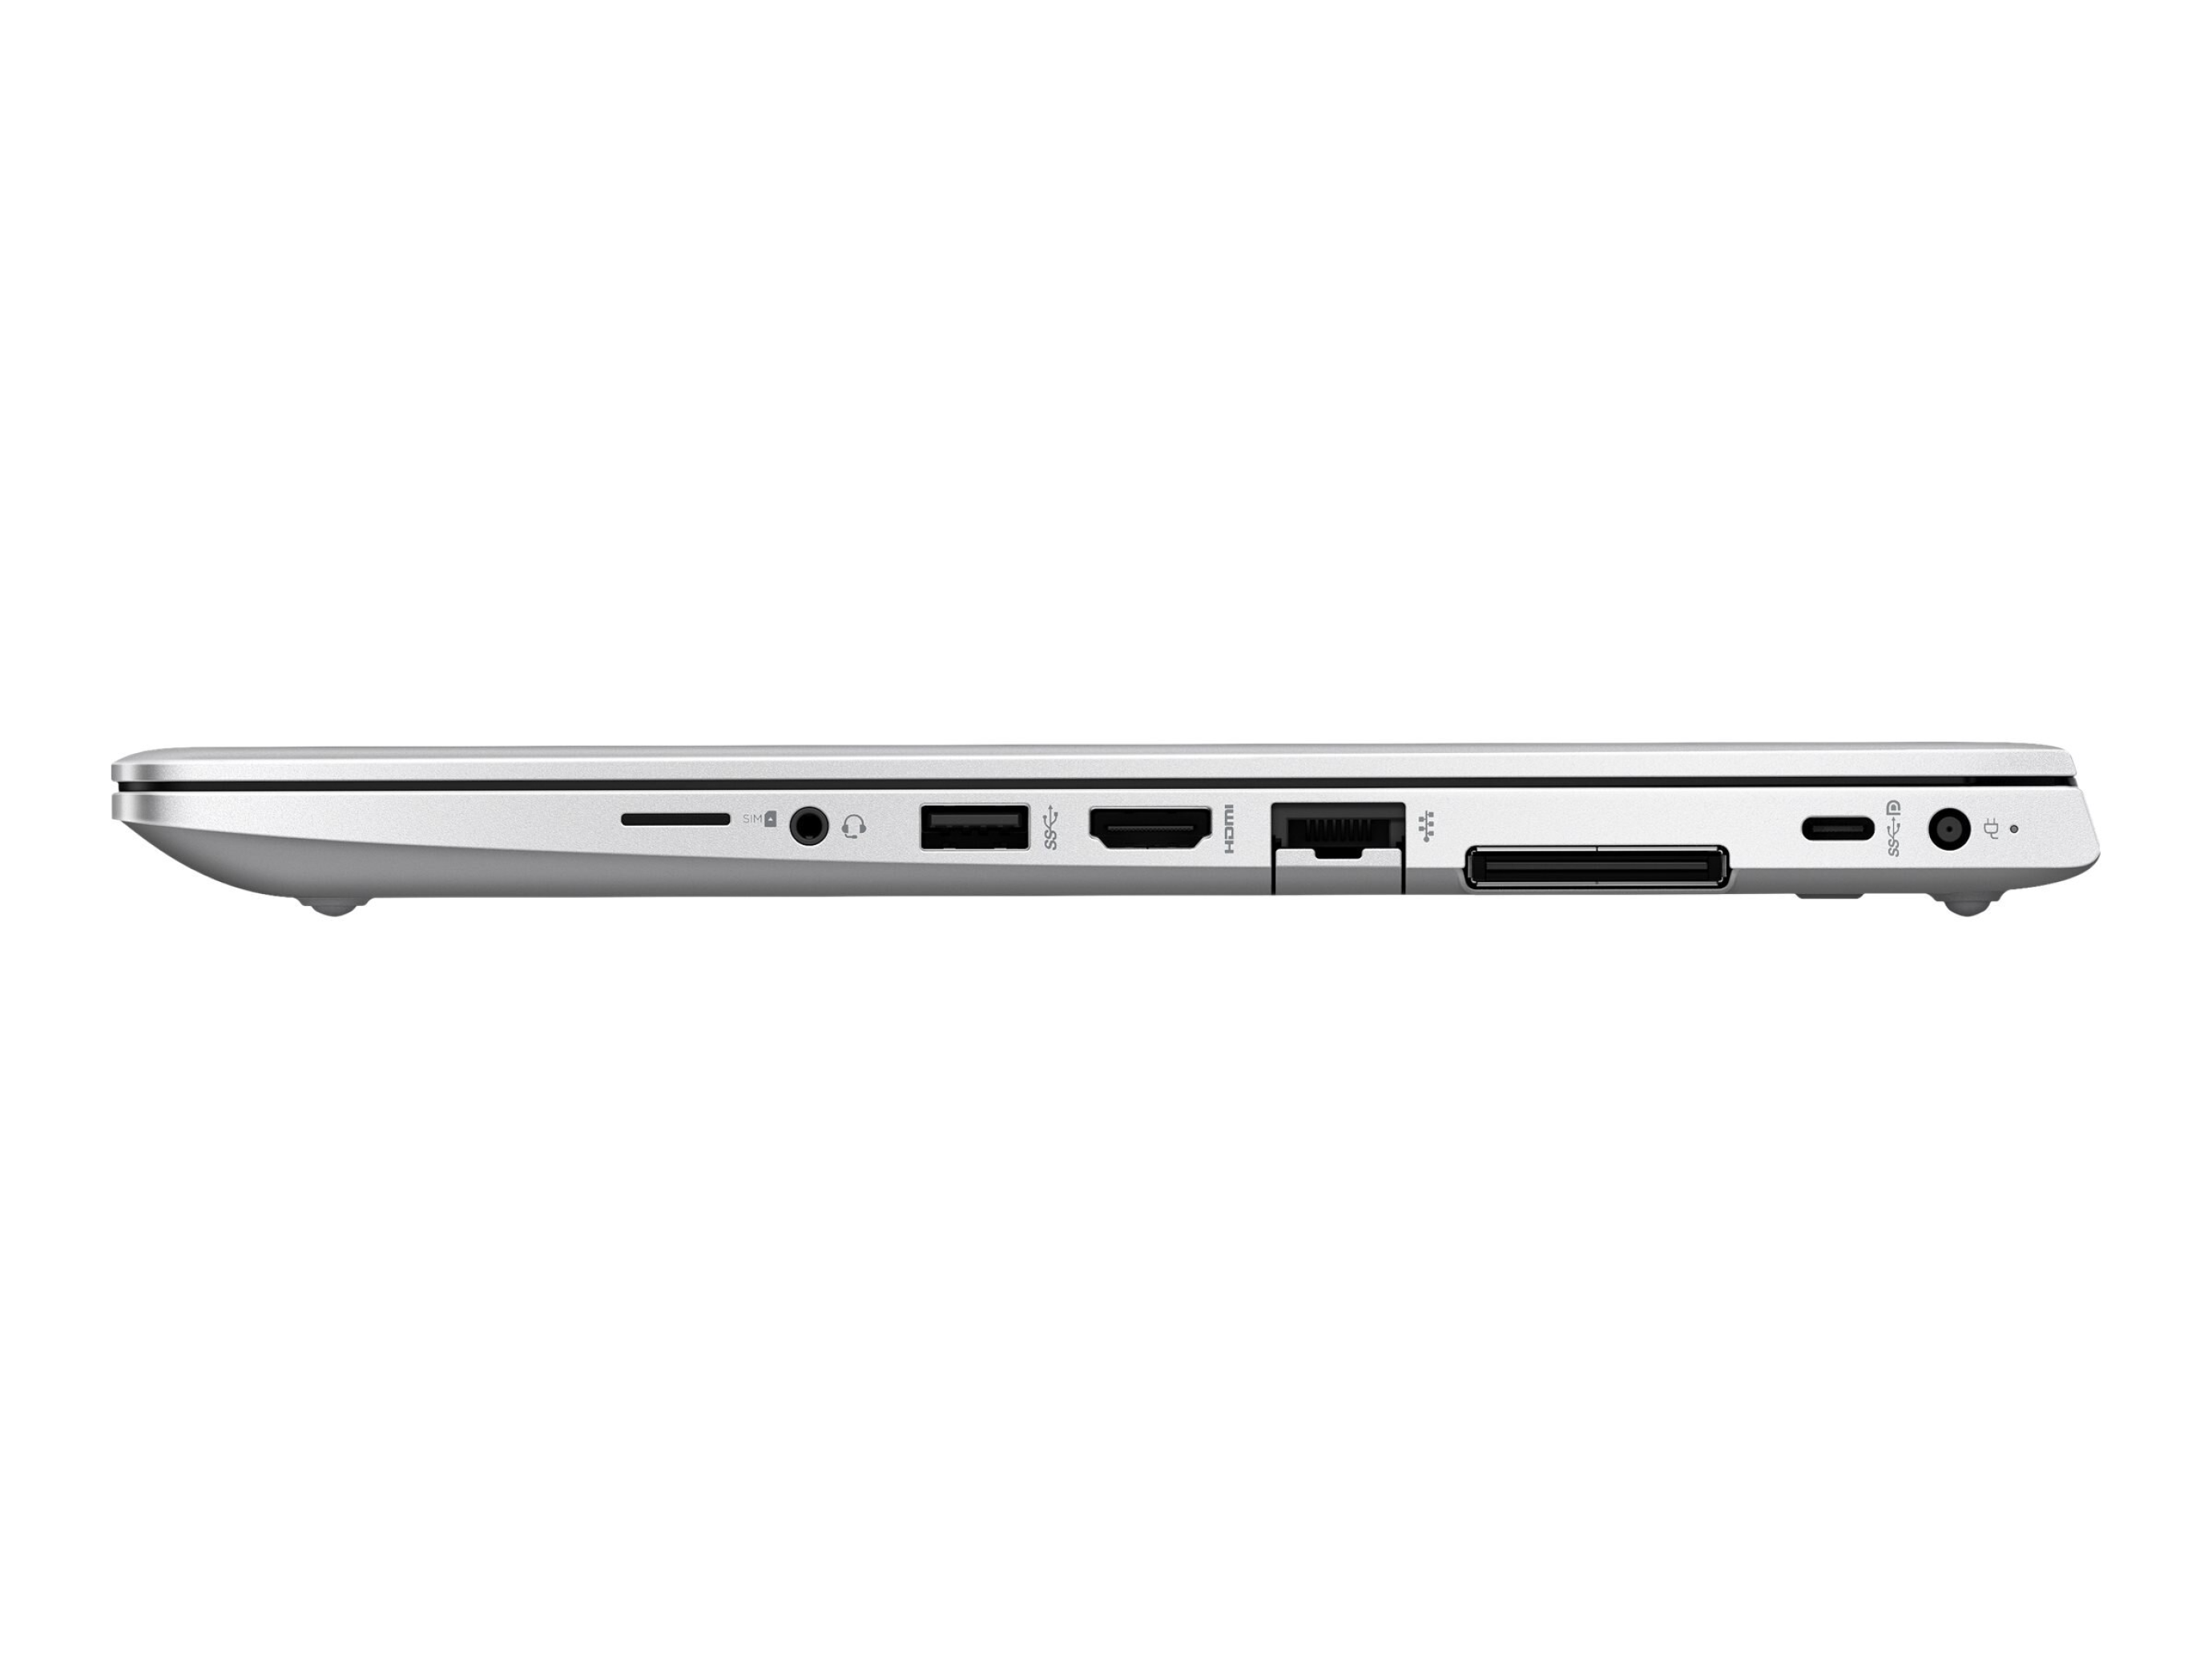  خرید و قیمت لپ تاپ HP 745 G6 Ryzen 5 5300U | لاکچری لپ تاپ 